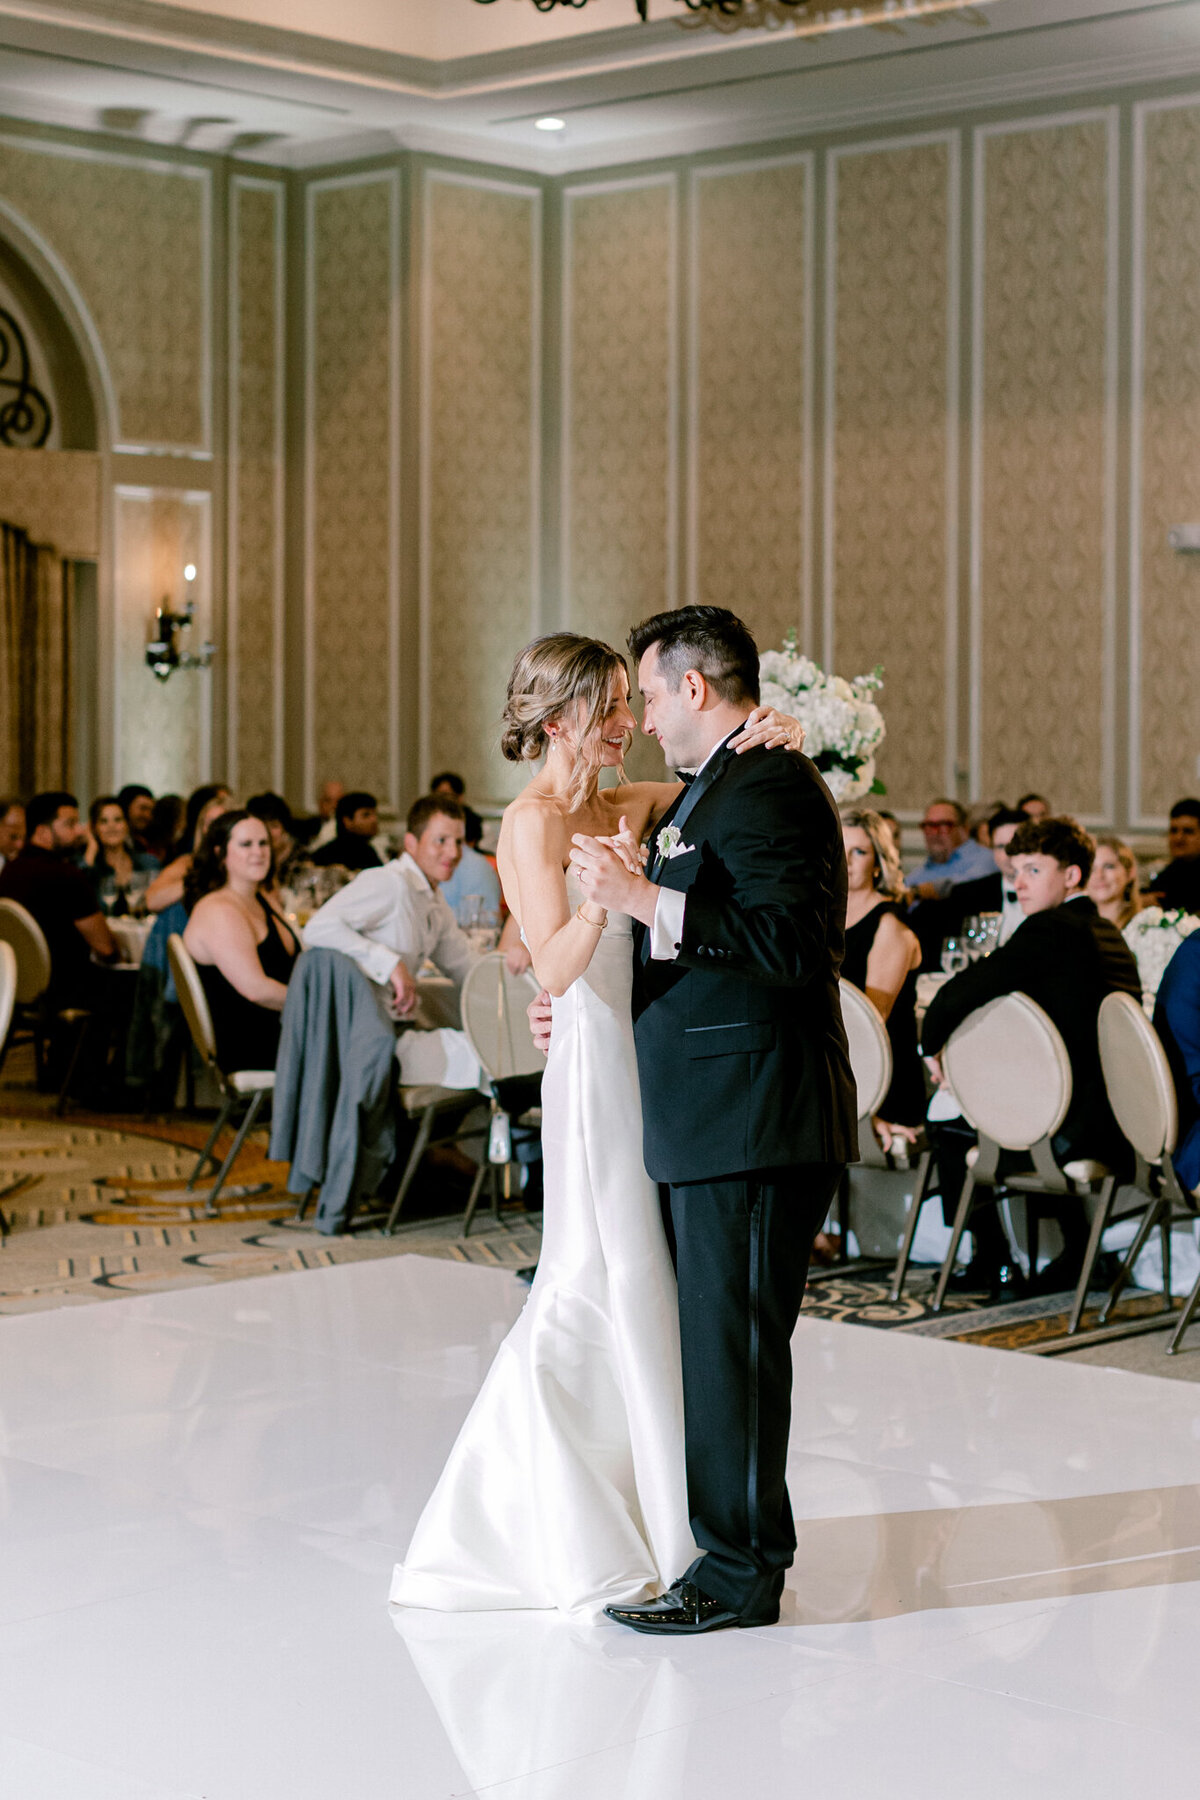 Virginia & Michael's Wedding at the Adolphus Hotel | Dallas Wedding Photographer | Sami Kathryn Photography-196